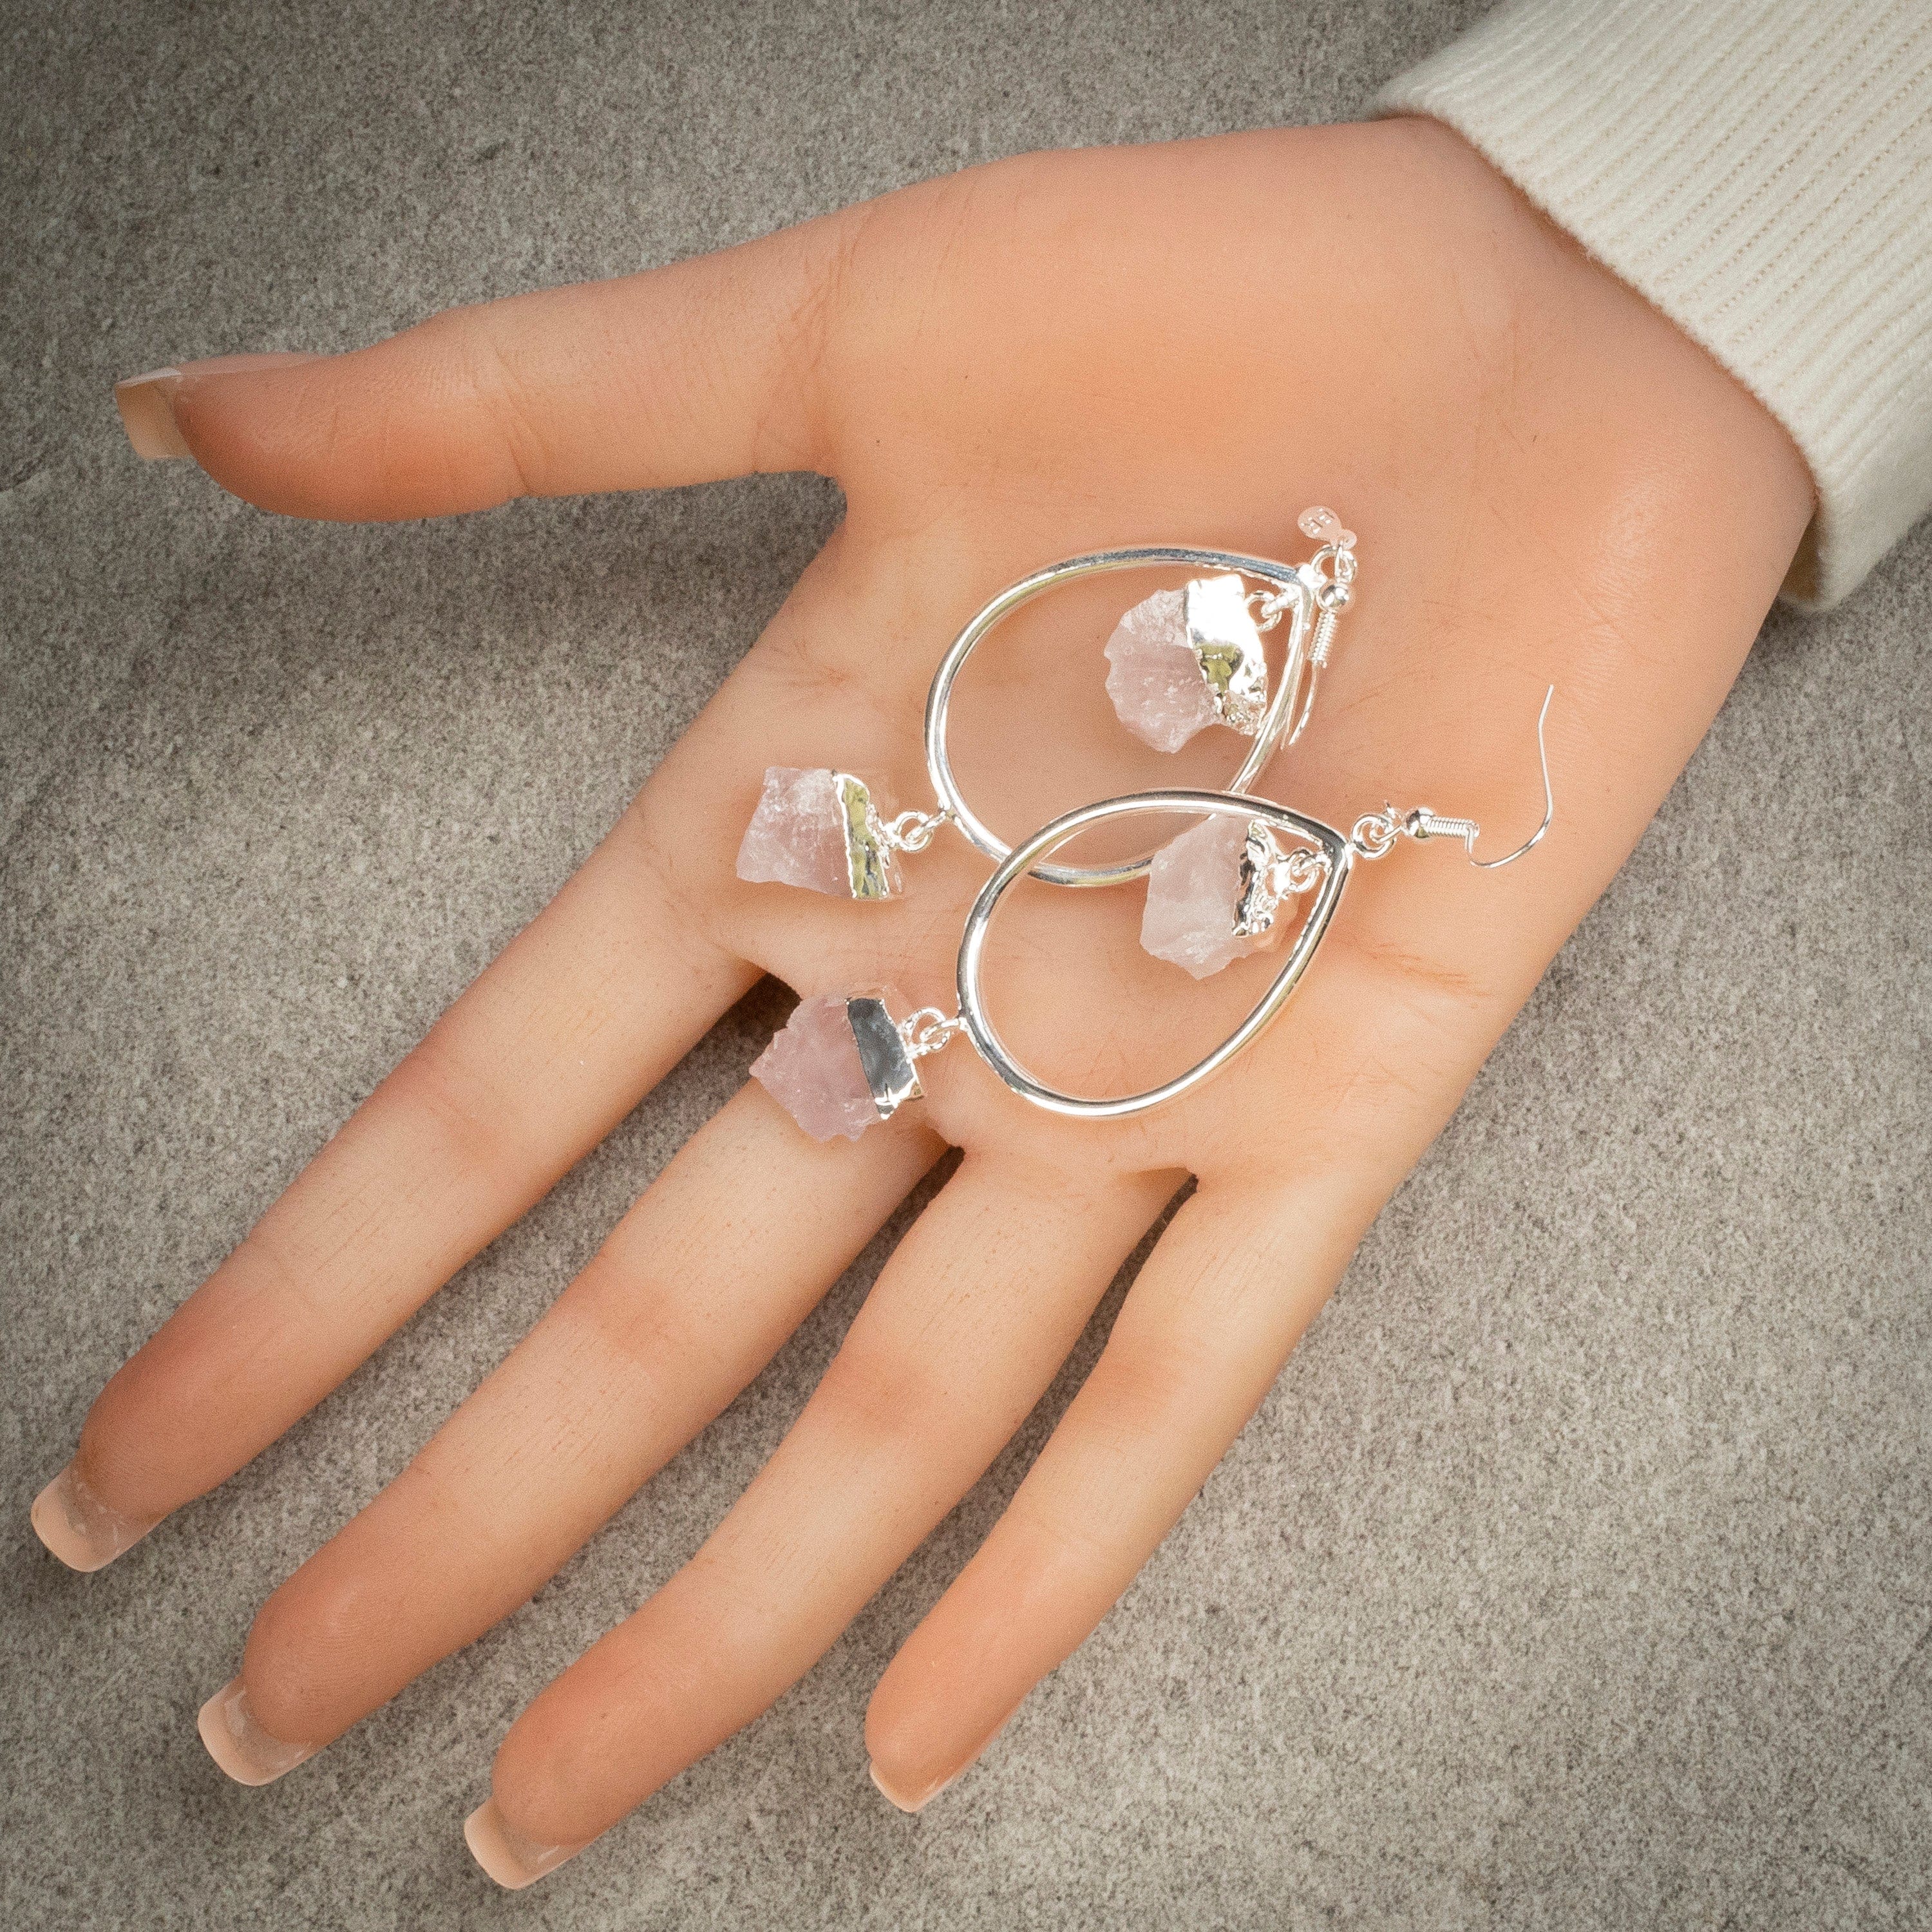 Kalifano Crystal Jewelry Rose Quartz Crystal Drop French Hook Earrings CJE-1548-RQ